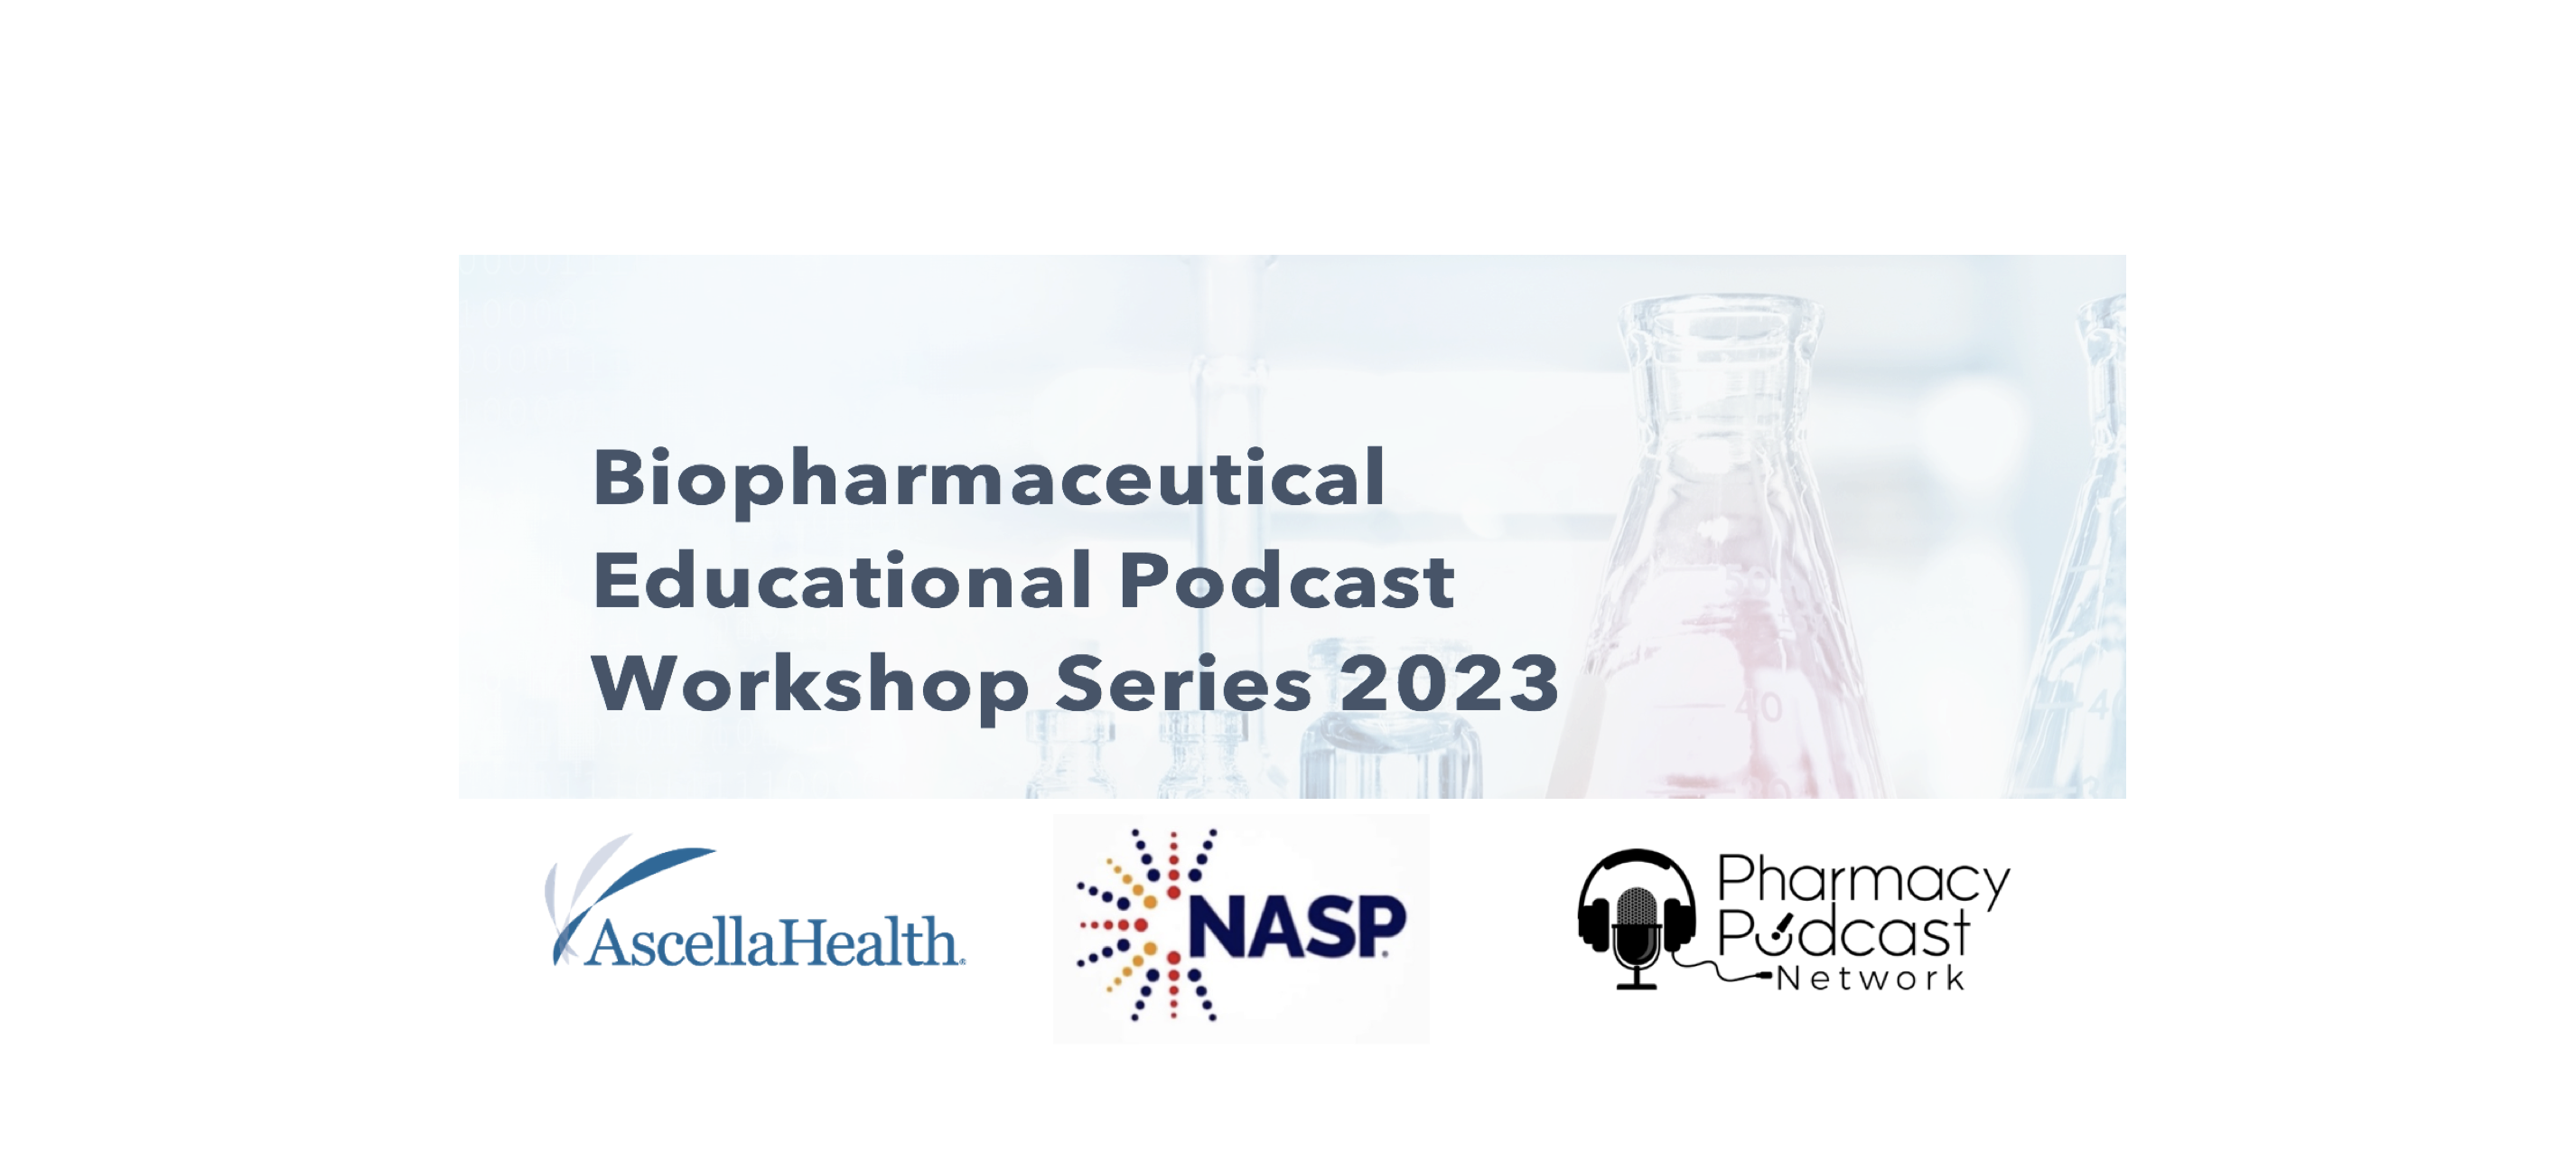 Biopharmaceutical Educational Podcast Workshop Series 2023